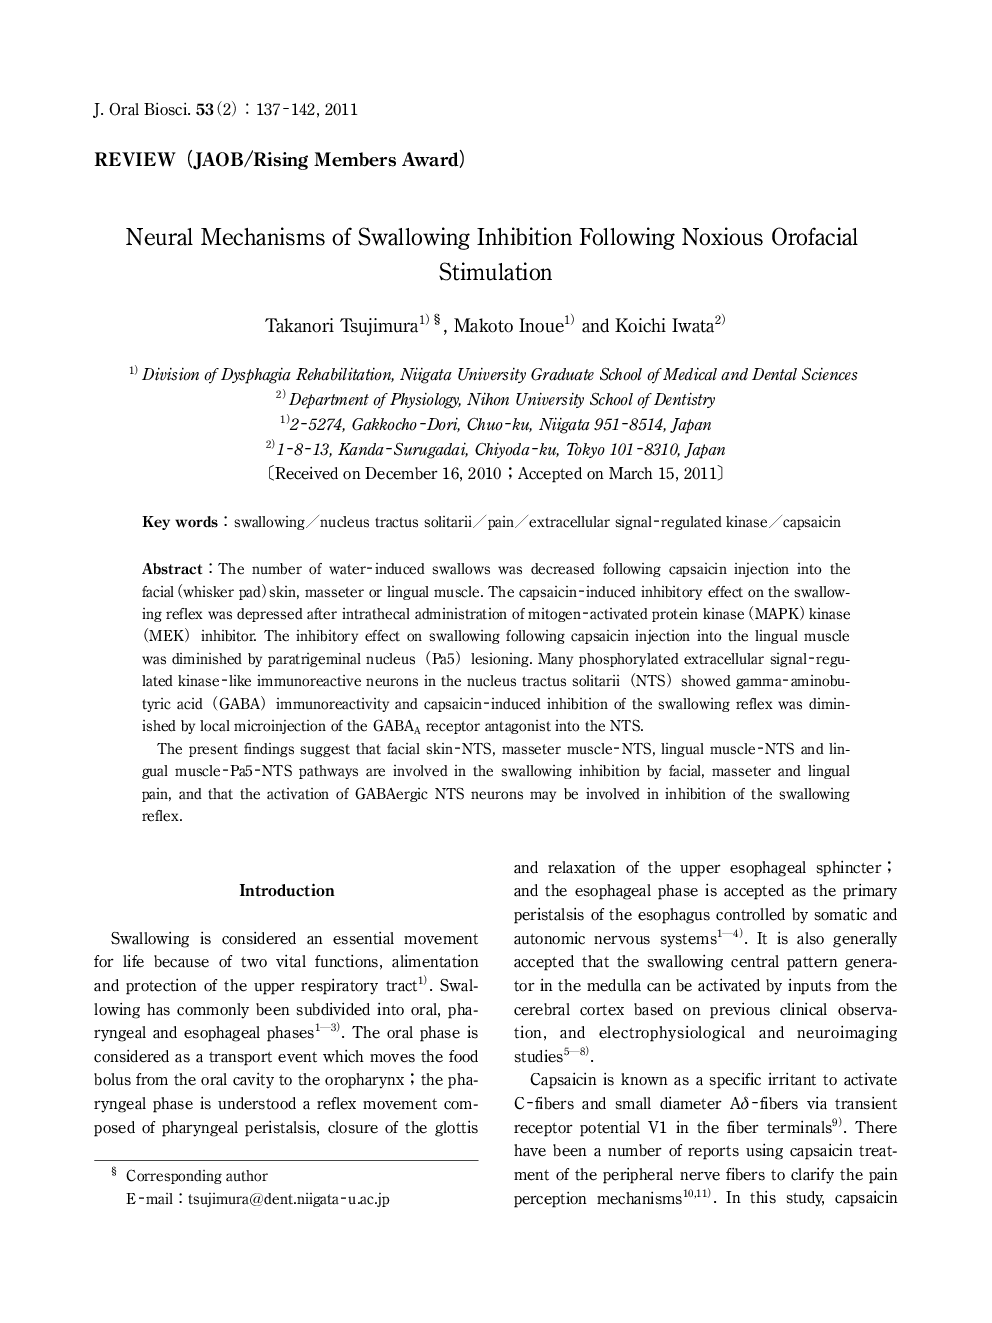 Neural Mechanisms of Swallowing Inhibition Following Noxious Orofacial Stimulation